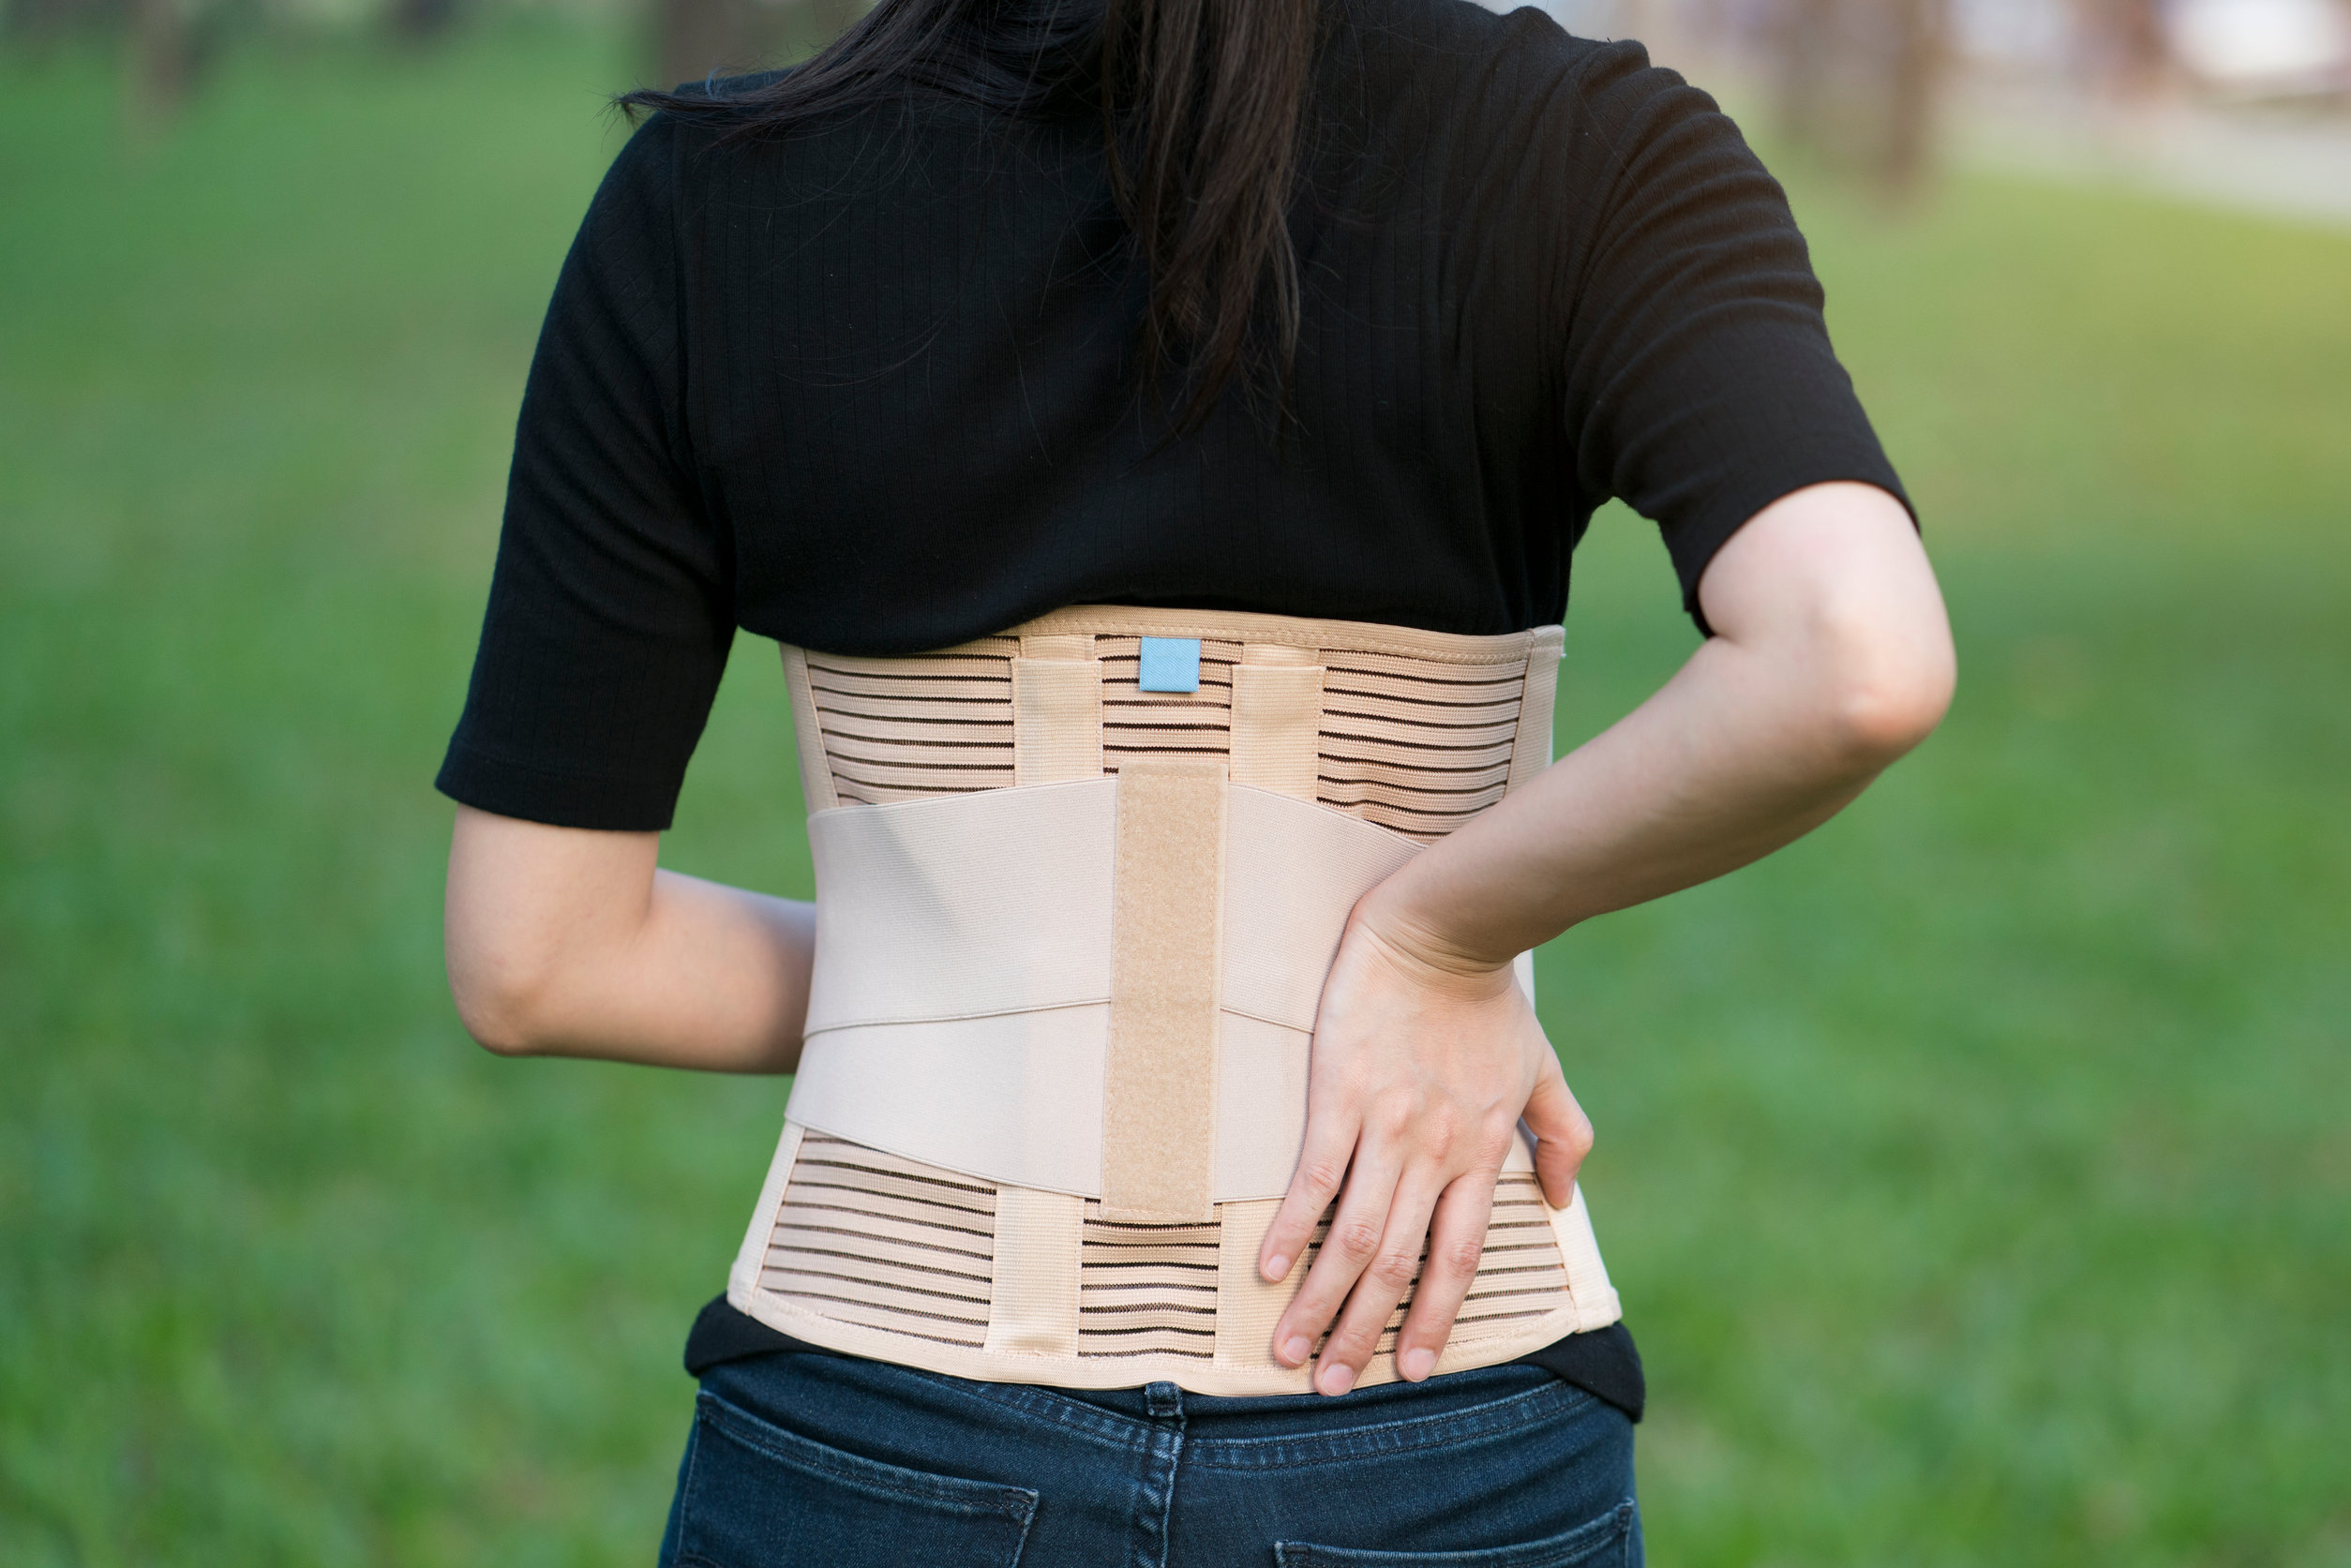 Best Back Brace For Lower Back Pain